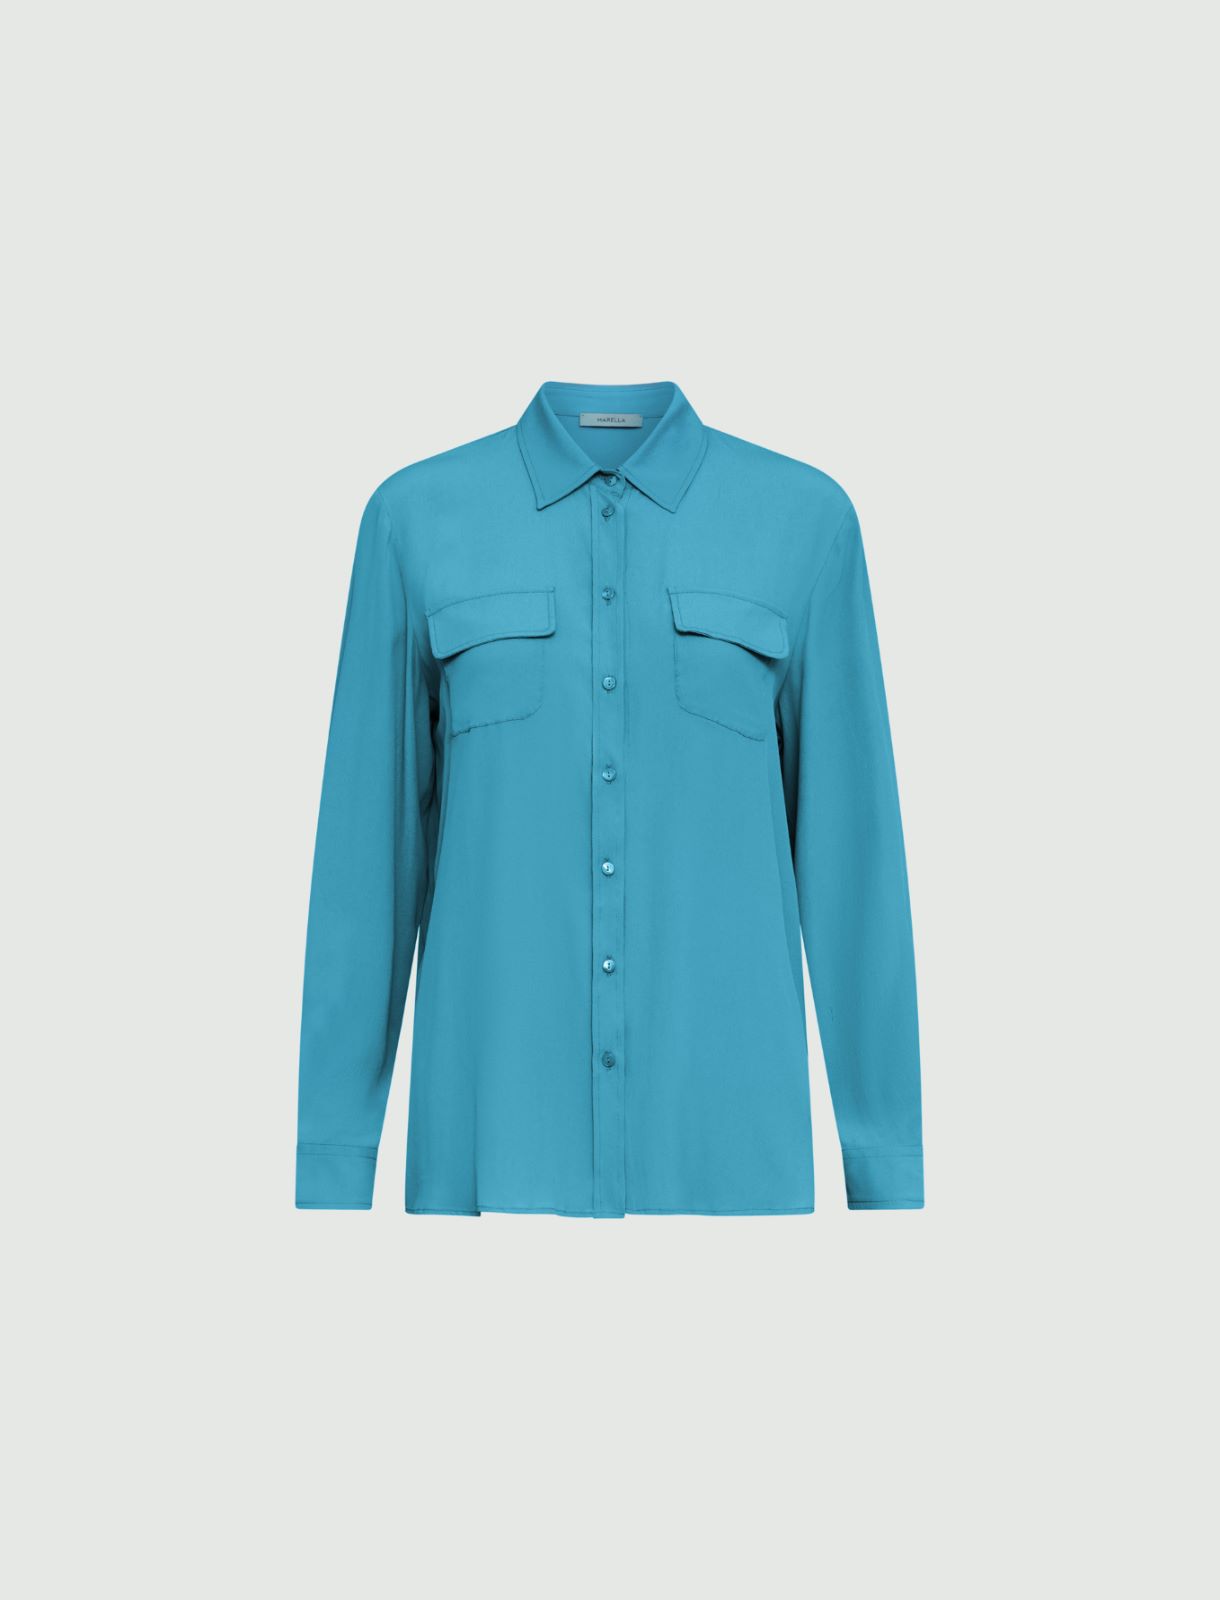 Crepe shirt - Turquoise - Marella - 5